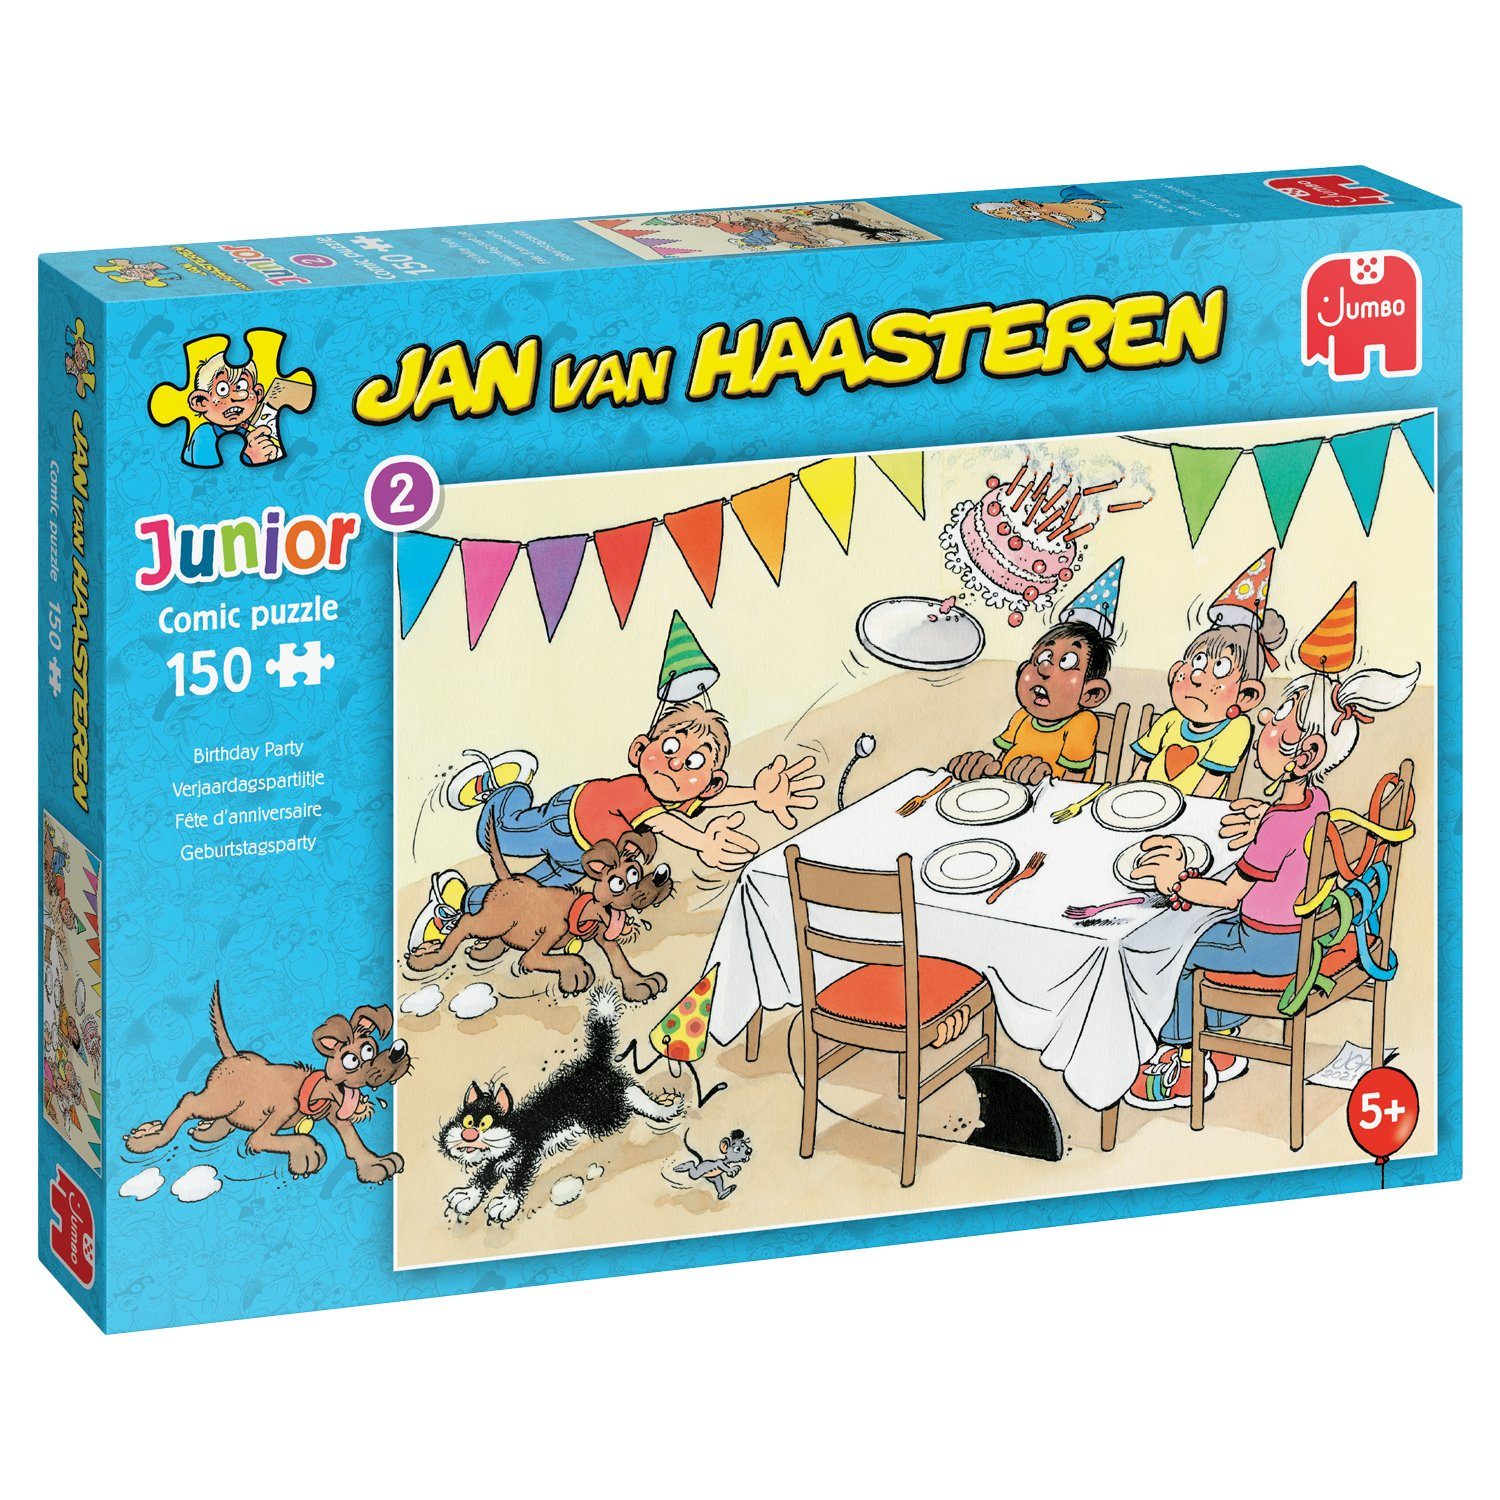 Jumbo Spiele Puzzle Jan van Haasteren Junior 2 Geburtstagsparty, 150 Puzzleteile, Made in Europe